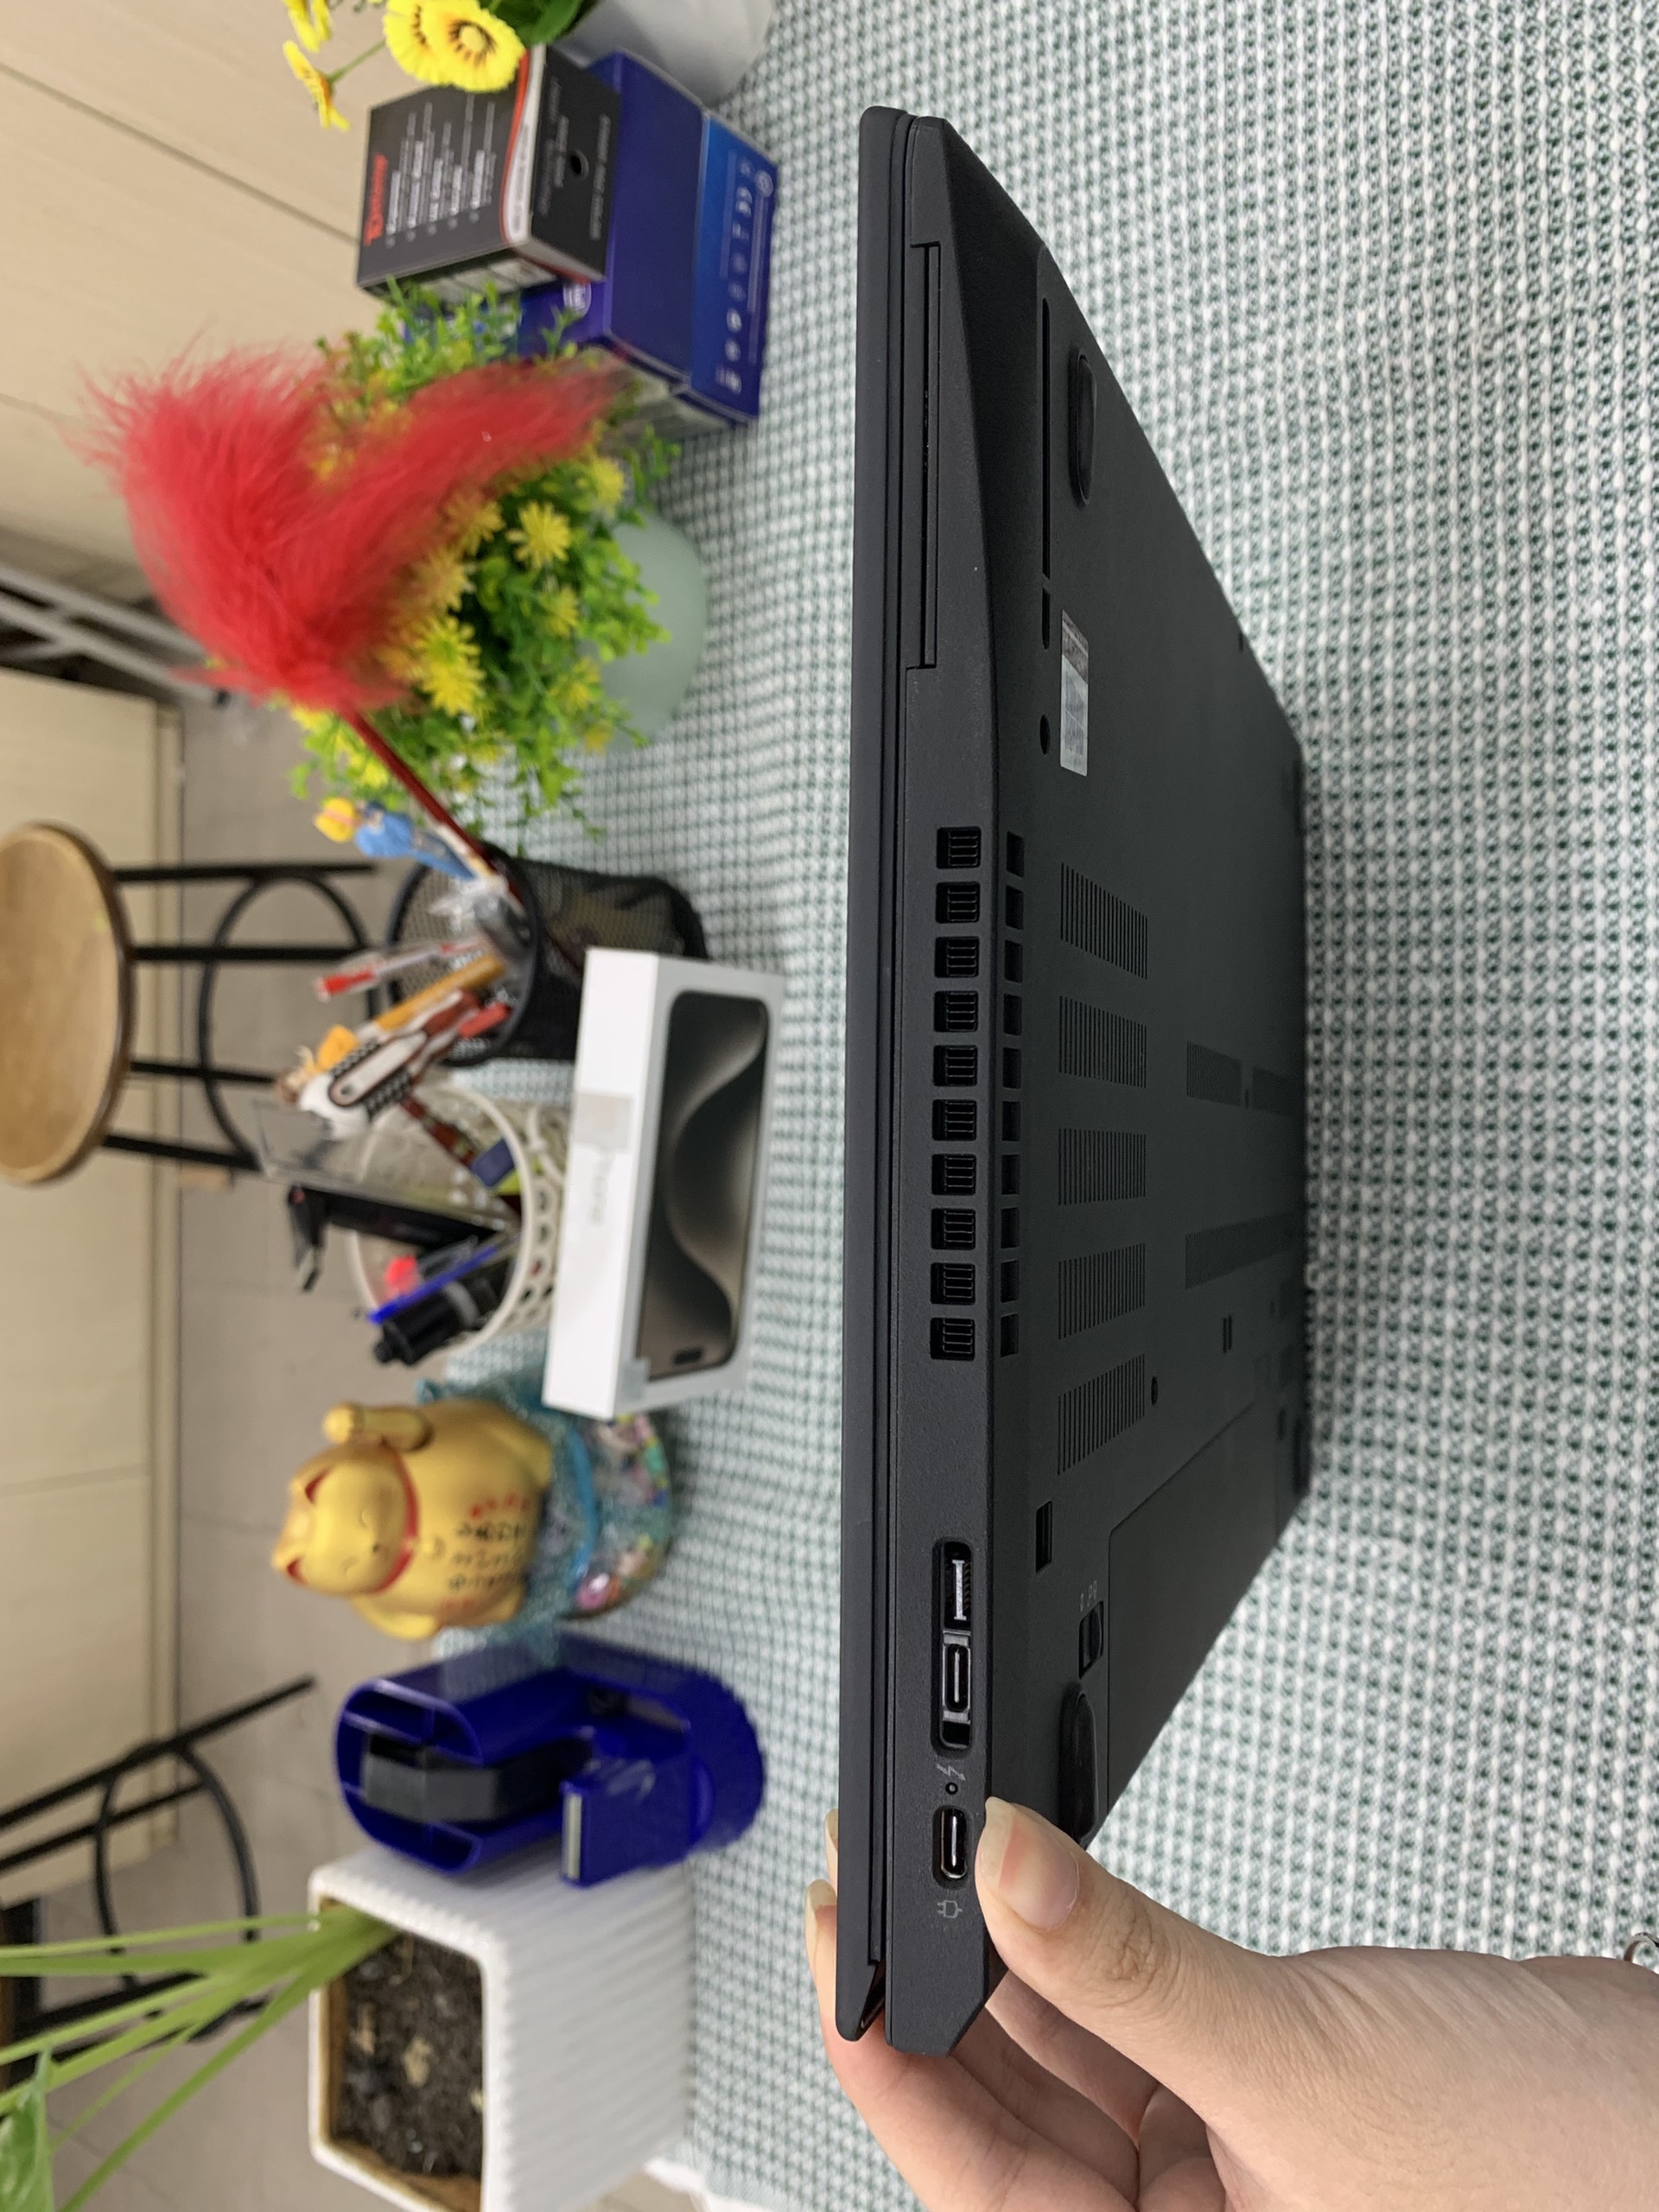 ThinkPad T580